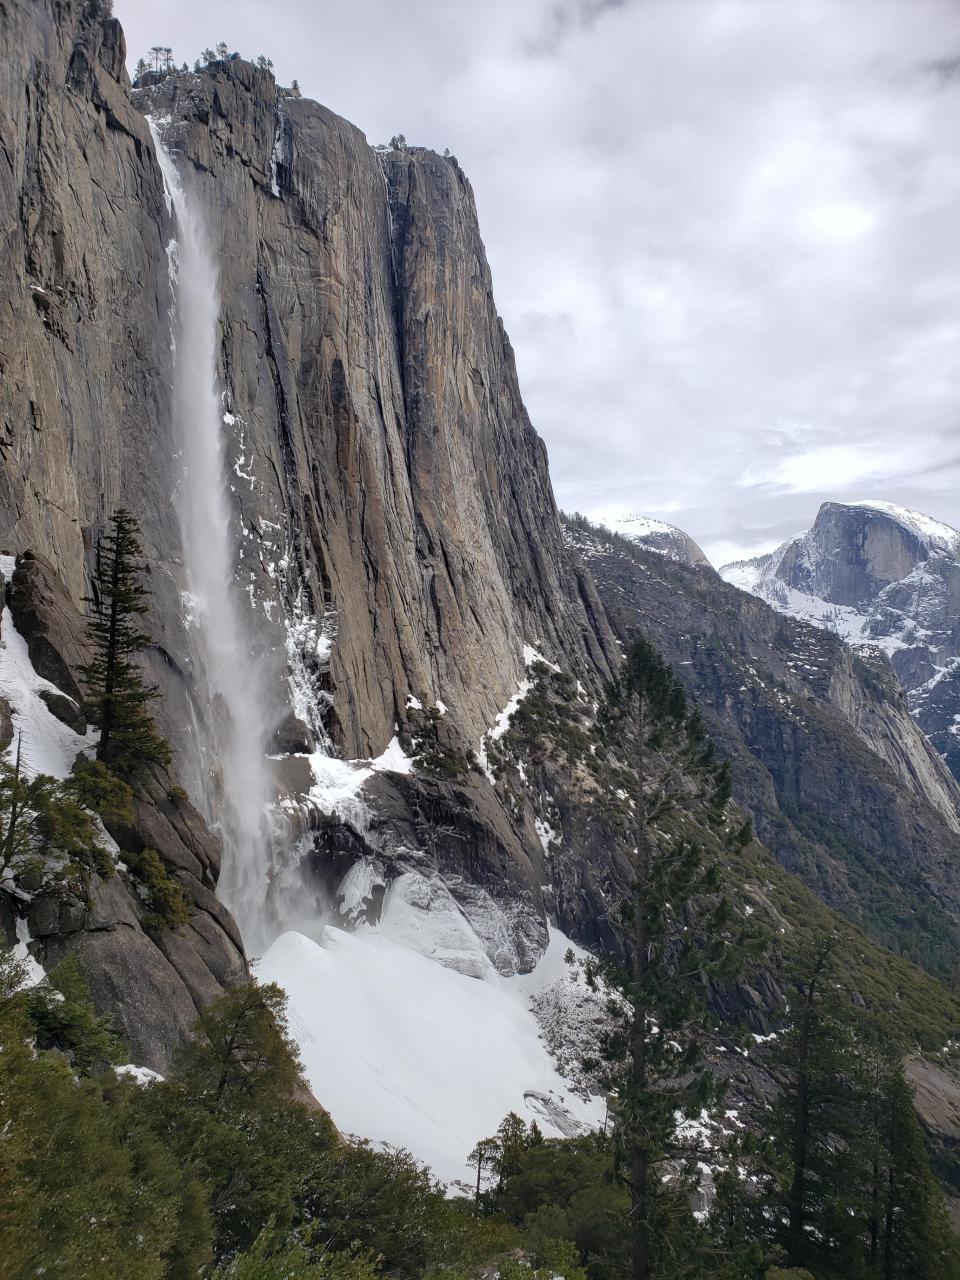 My first post on reddit! Yosemite Falls and Half Dome in Yosemite